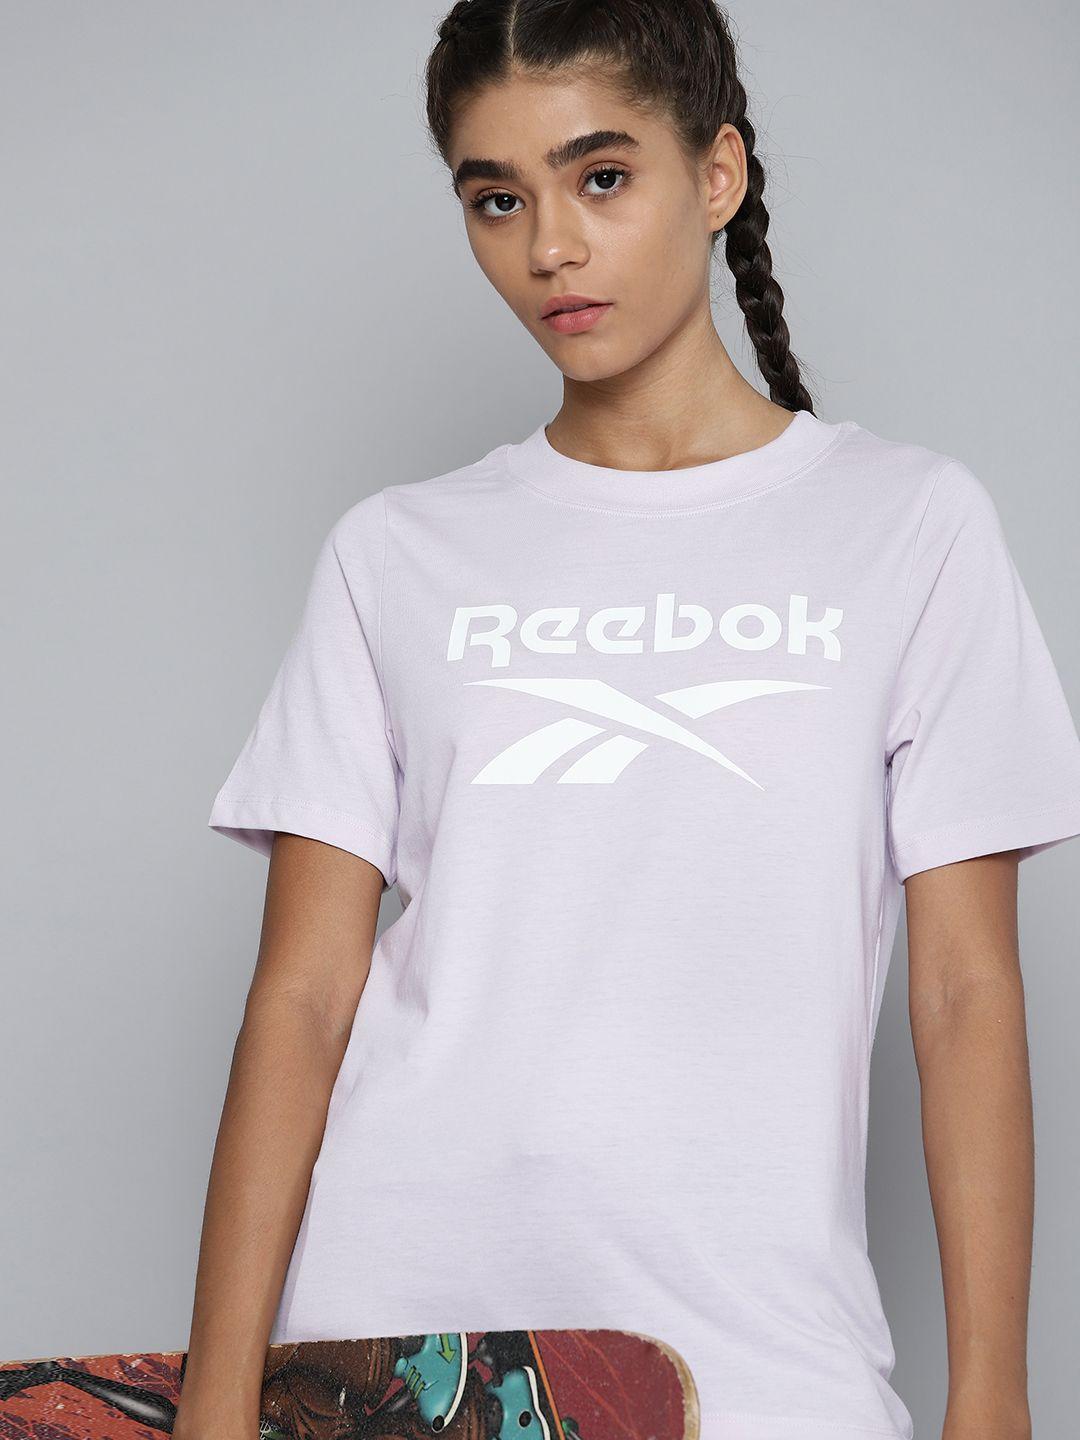 reebok women lavender brand logo printed training or gym t-shirt